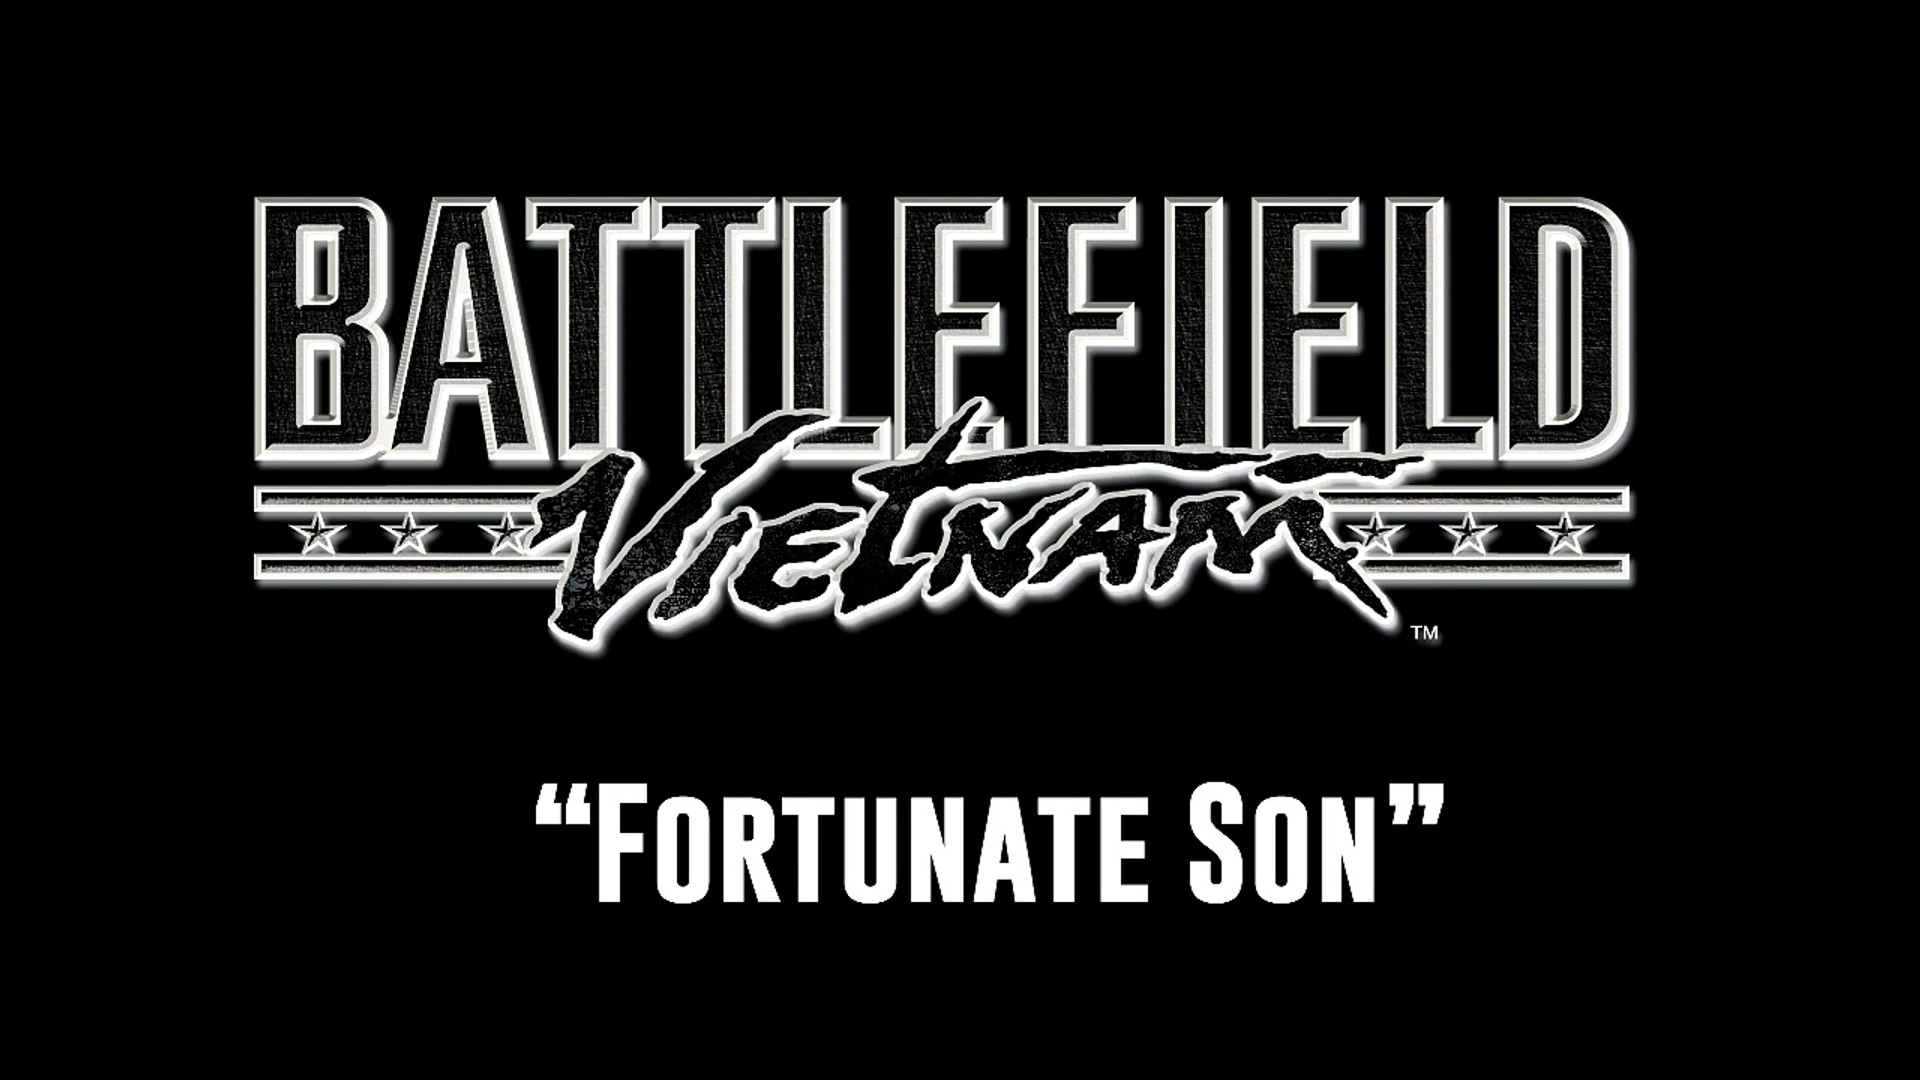 Battlefield (Bad Company 2) Vietnam -